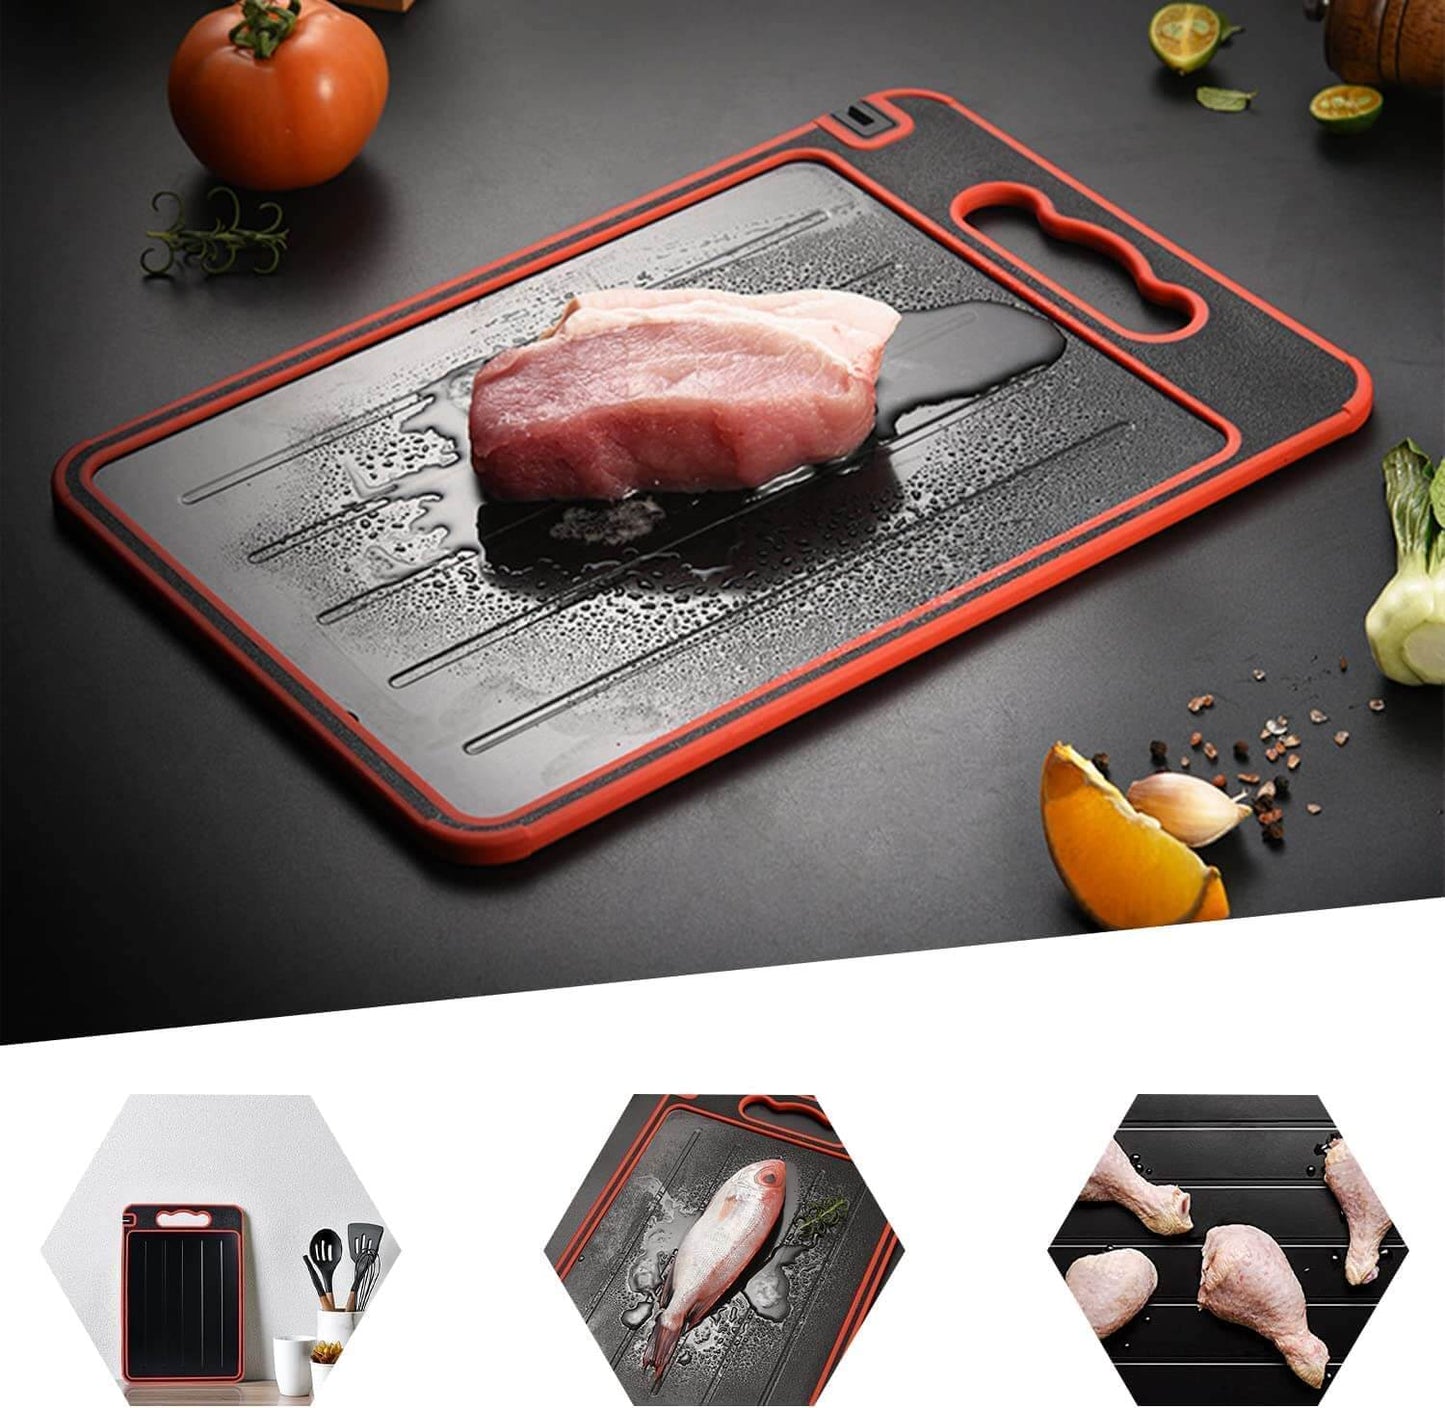 Versatile kitchen cutting board for efficient meal prep